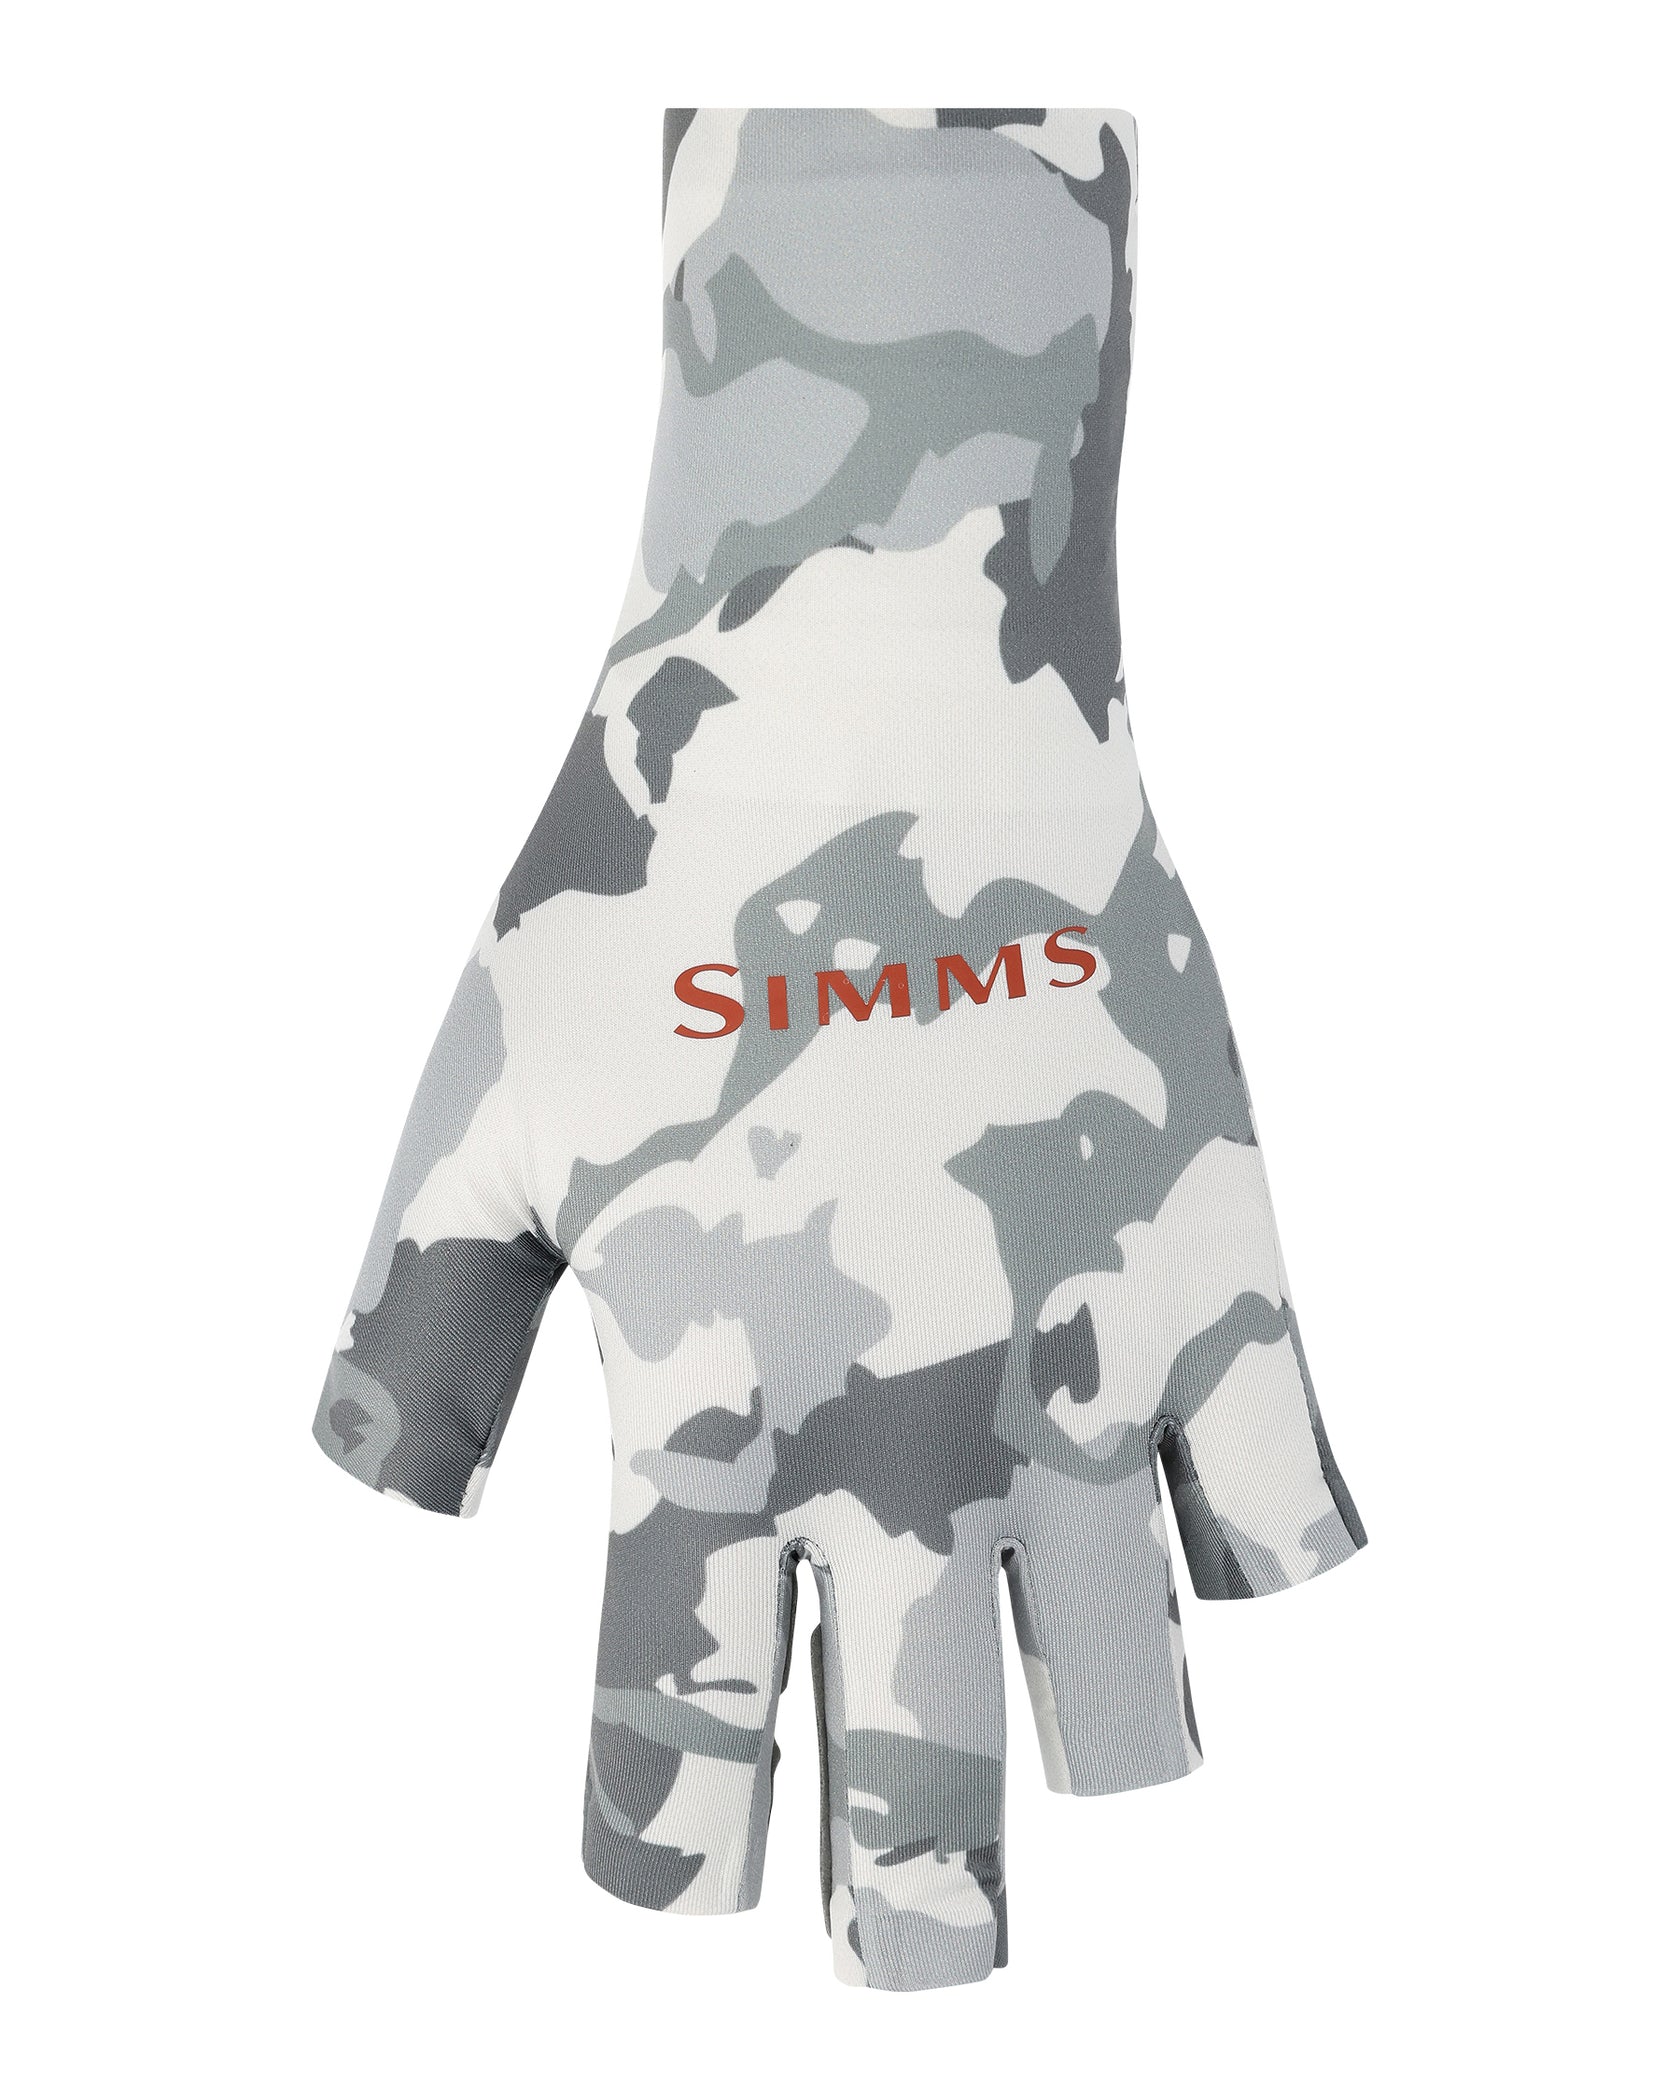 Simms SolarFlex SunGlove - Regiment Camo Cinder - Large